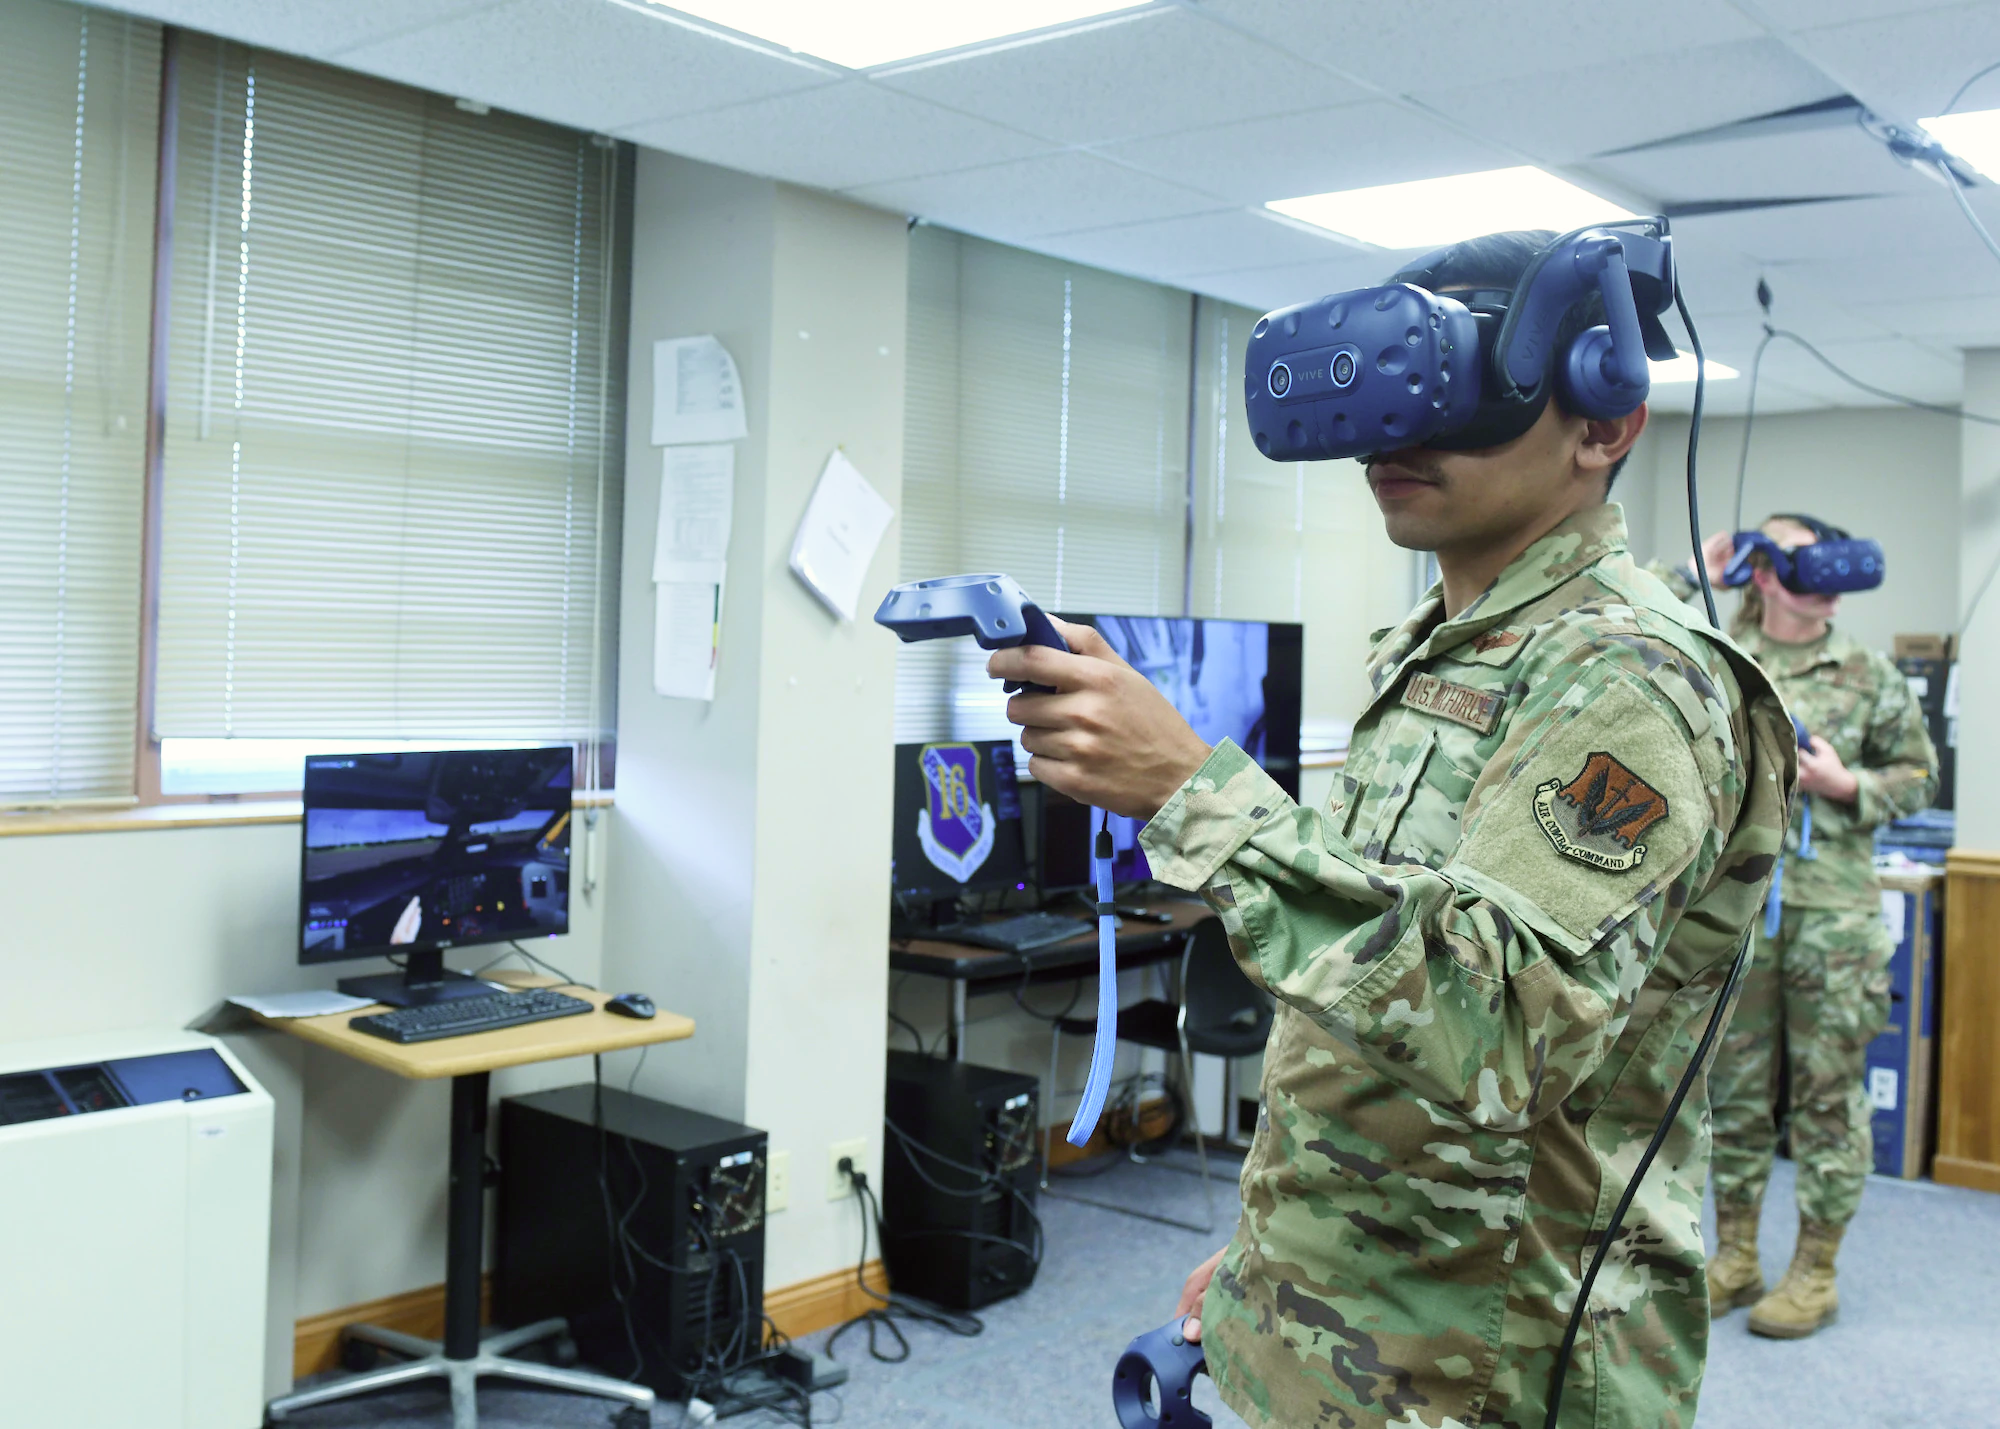 VR training: USAF